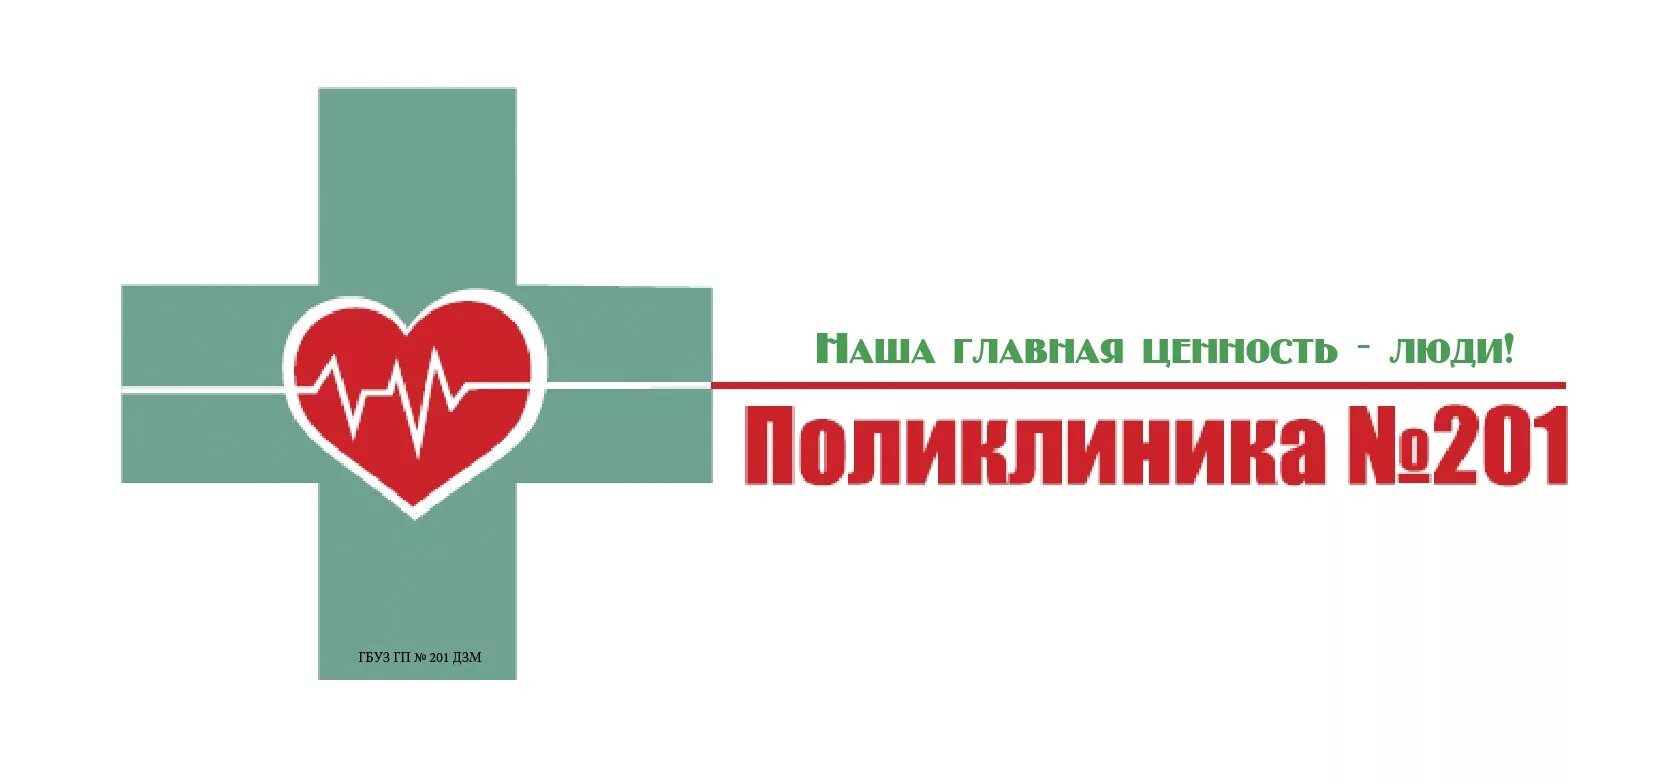 Поликлиника. Логотип больницы. Надпись поликлиника. Эмблема медицины поликлиника. Красный крест поликлиника телефон